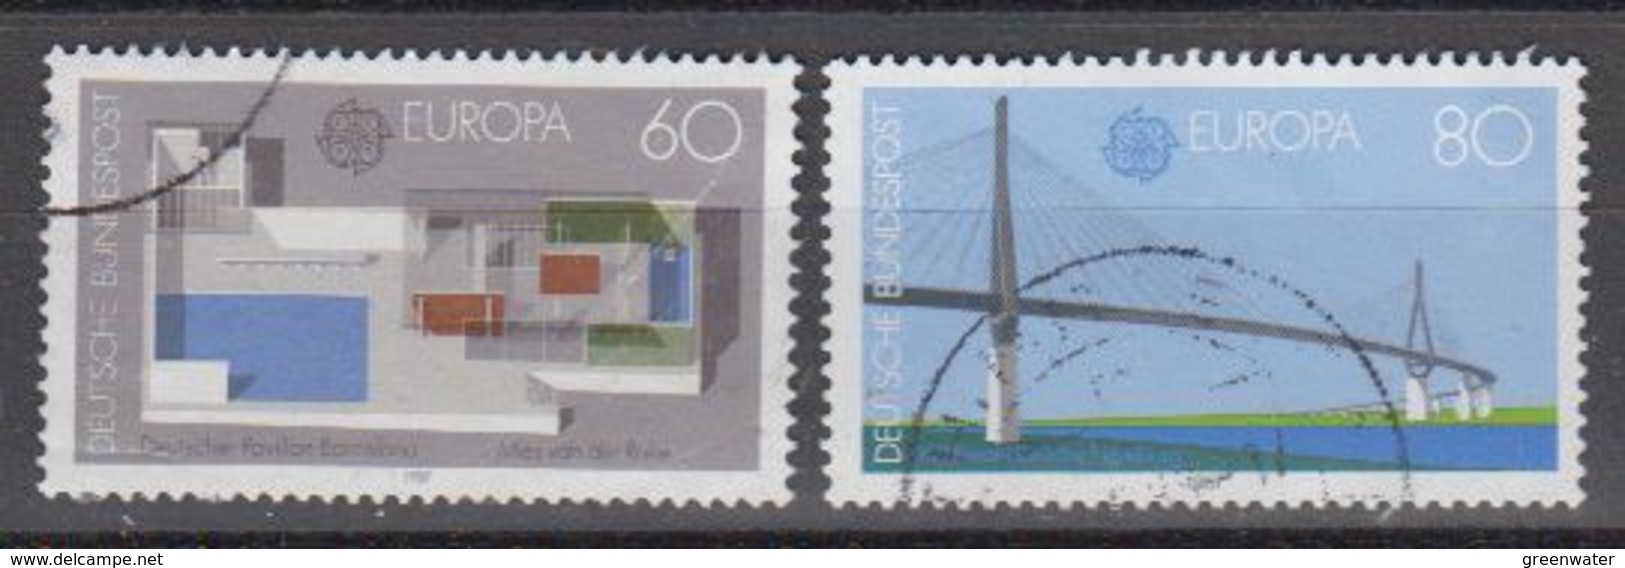 Europa Cept 1987 Germany 2v Used (40578G) - 1987